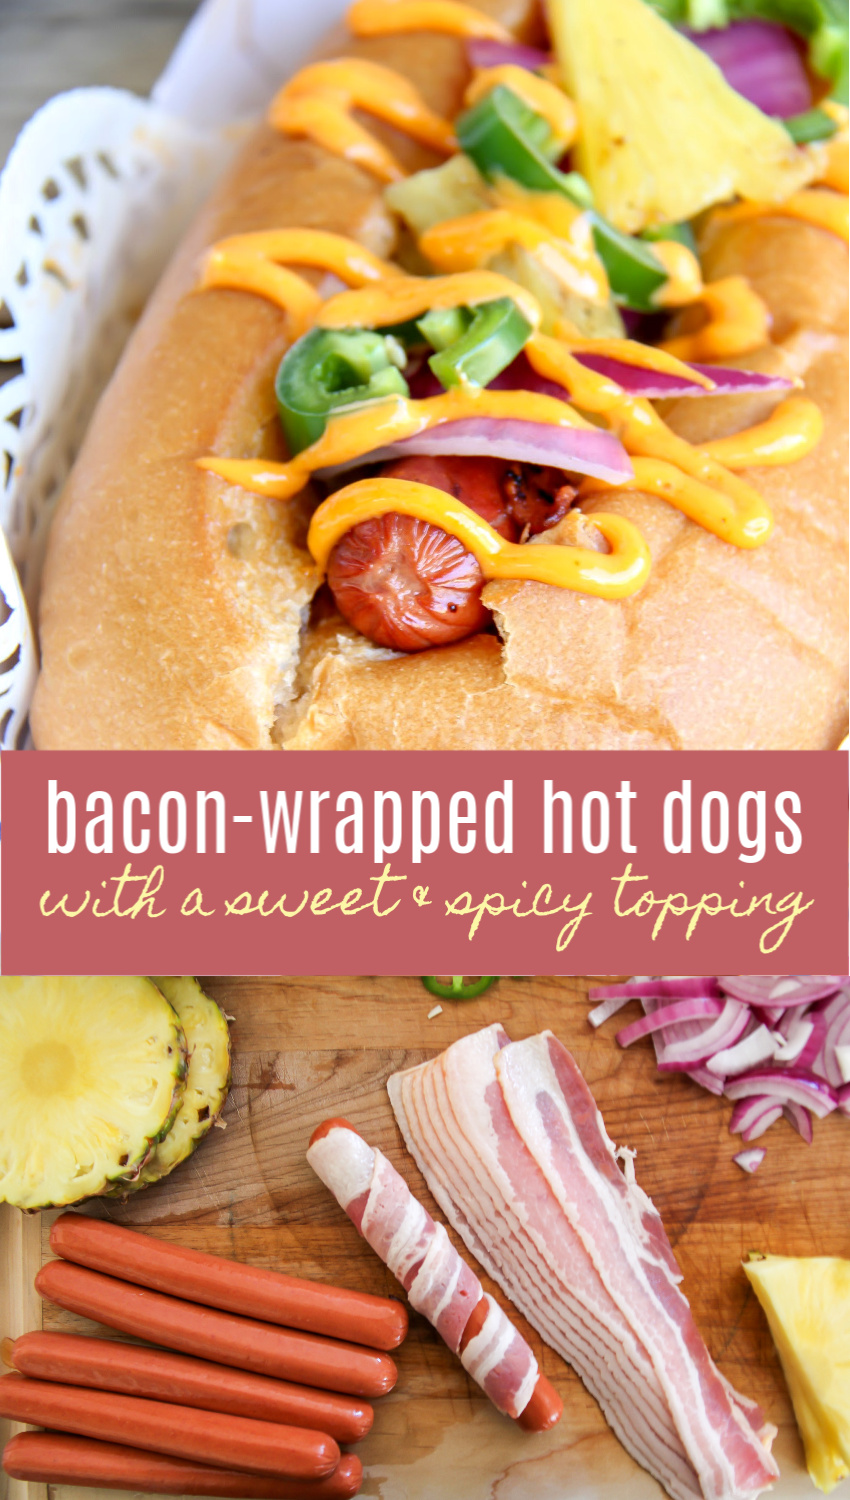 Summer hot dogs Pinterest image.